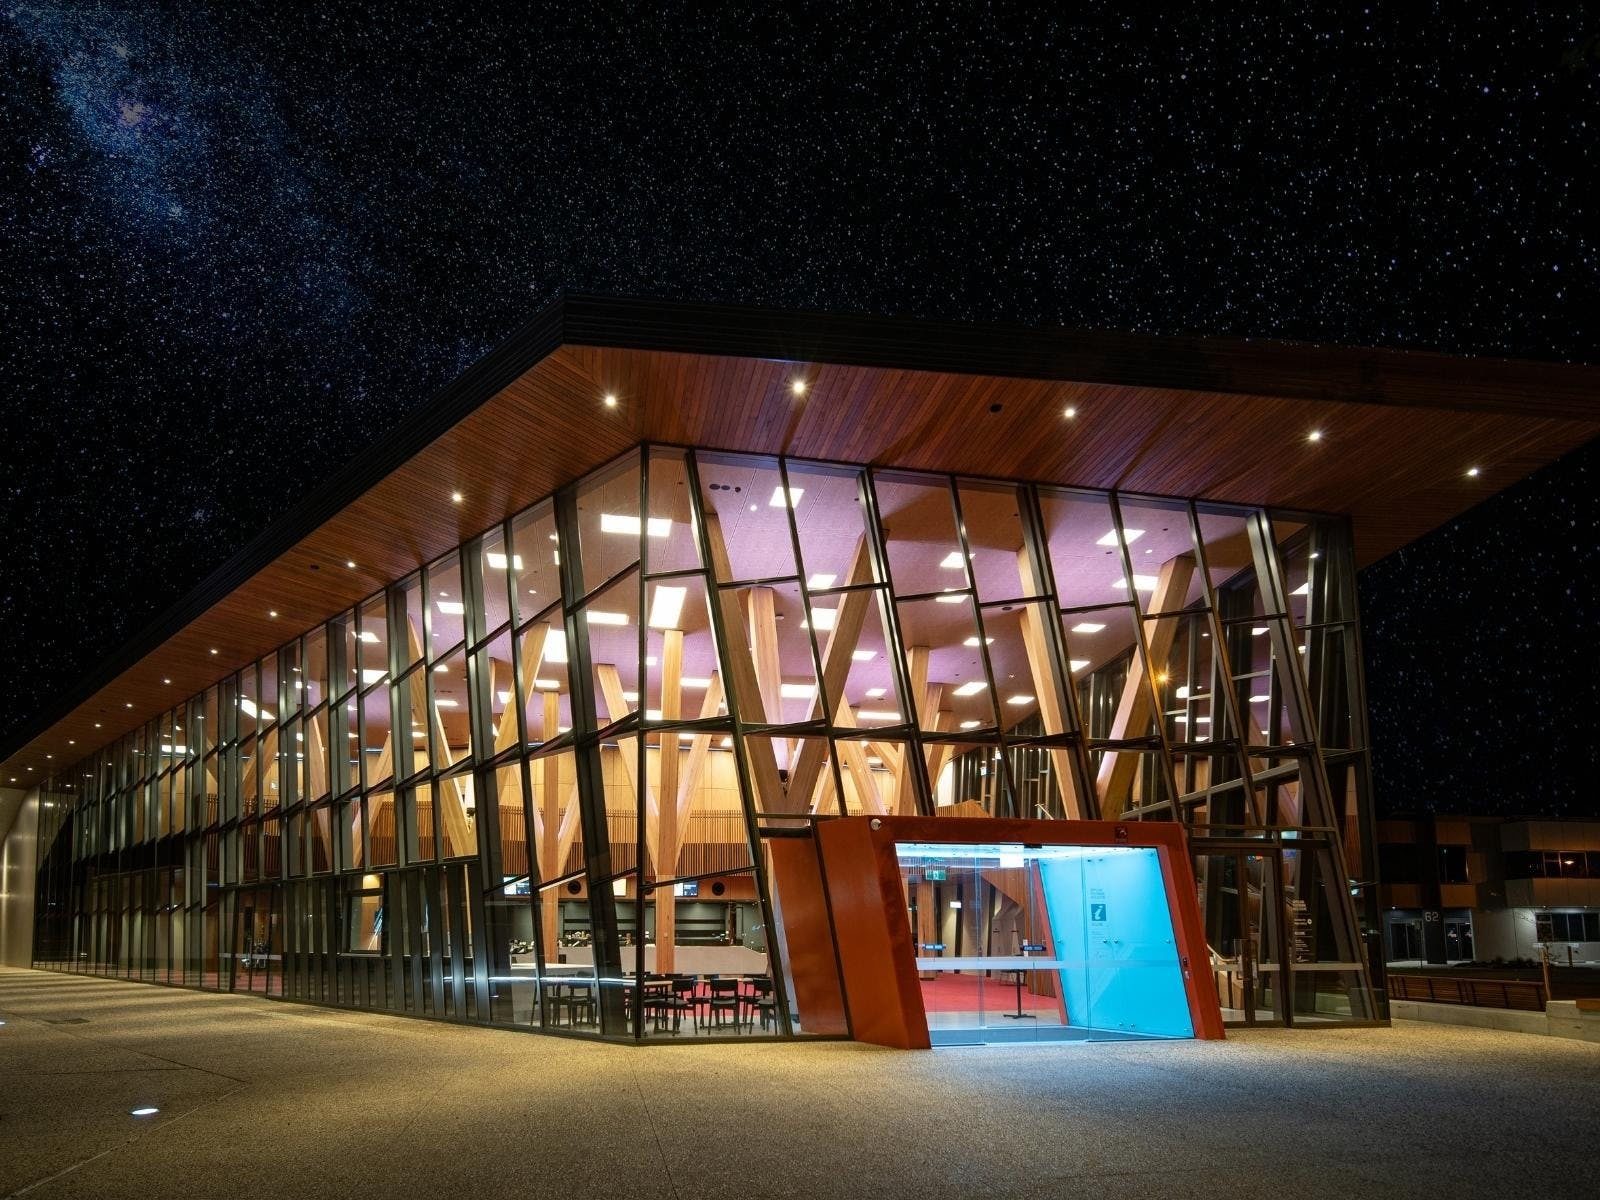 Latrobe performing arts centre at night